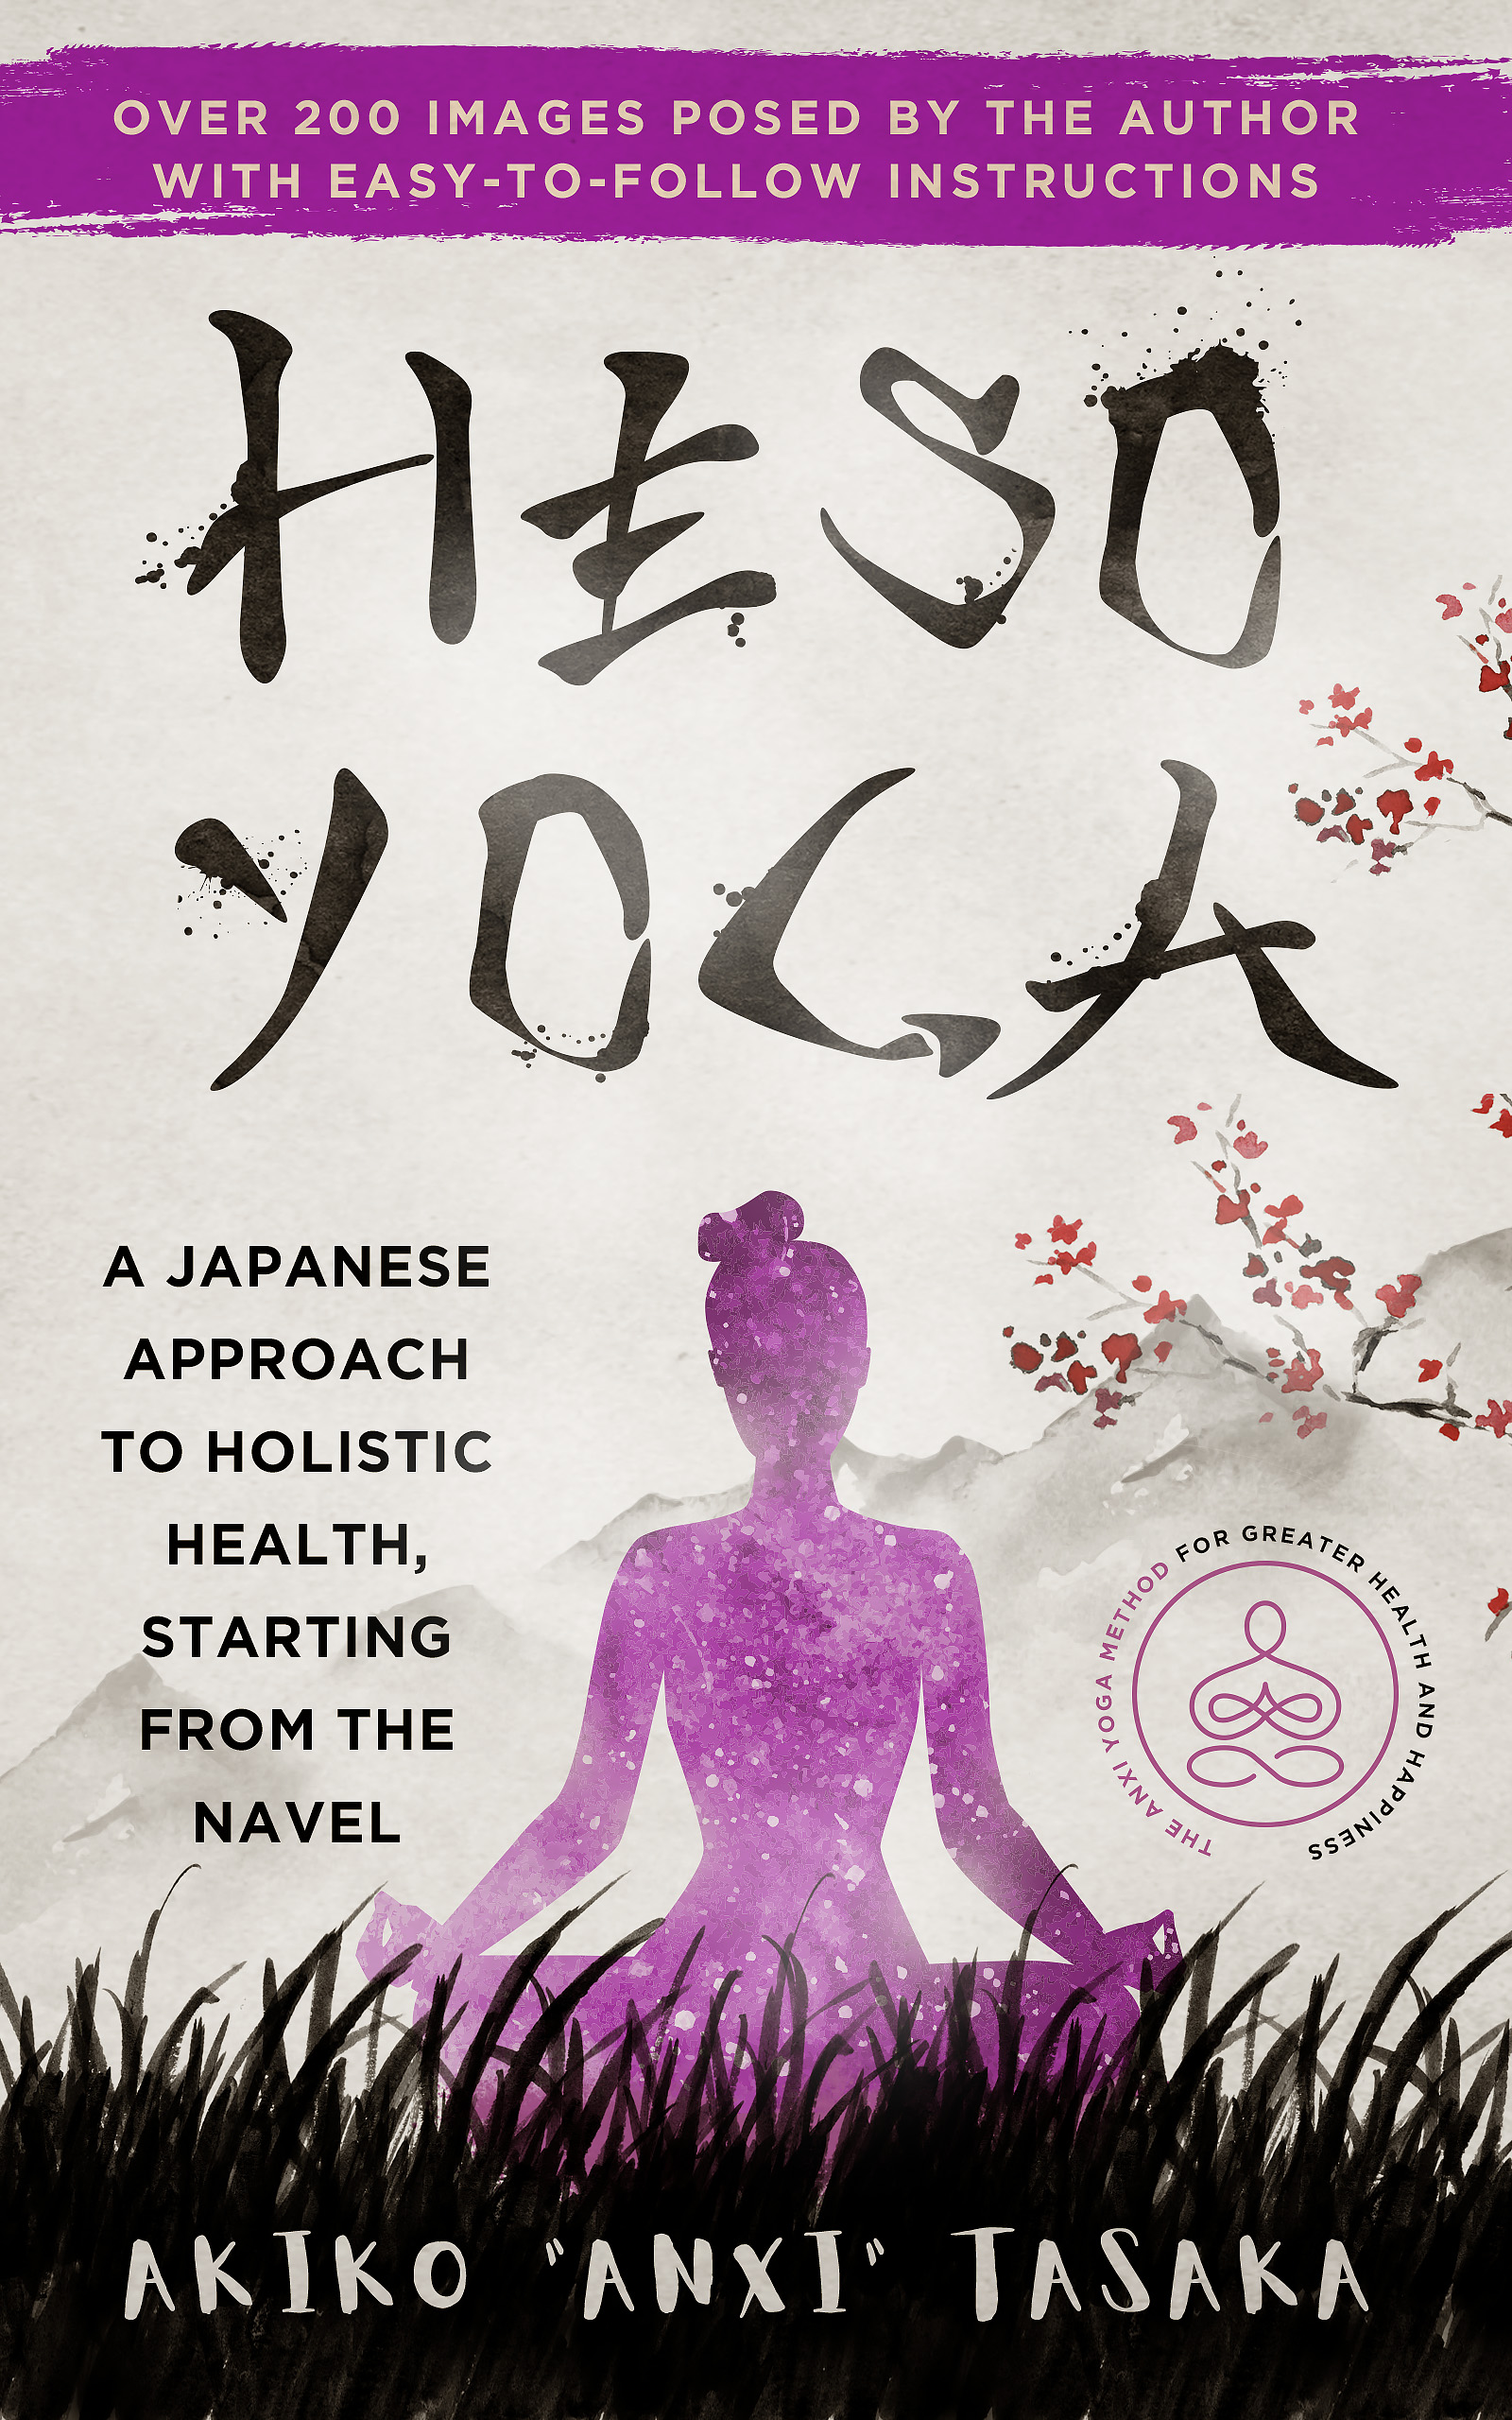 Ebook - Heso Yoga 03